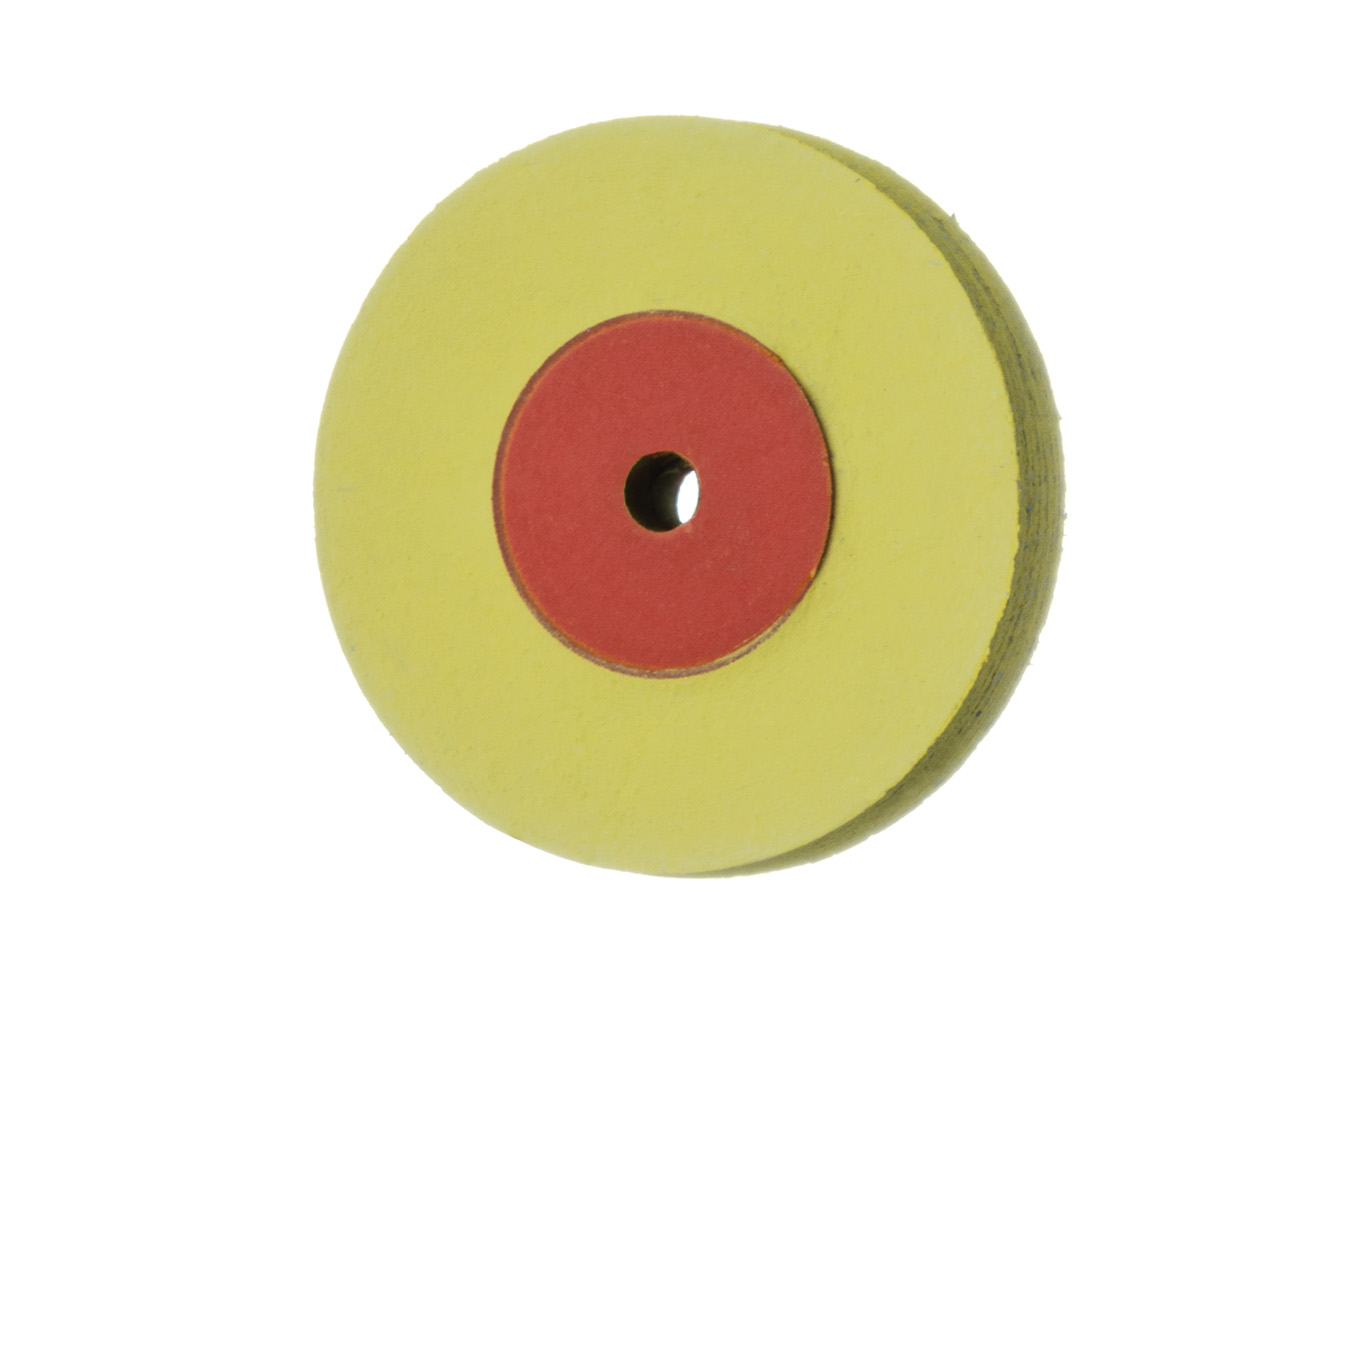 9752C-170-UNM-Y Polisher, Diamond Impregnated, For Porcelain, Yellow / Orange, Wheel, 17mm Ø, Mirror Finish Polishing (Extra Fine), UNM